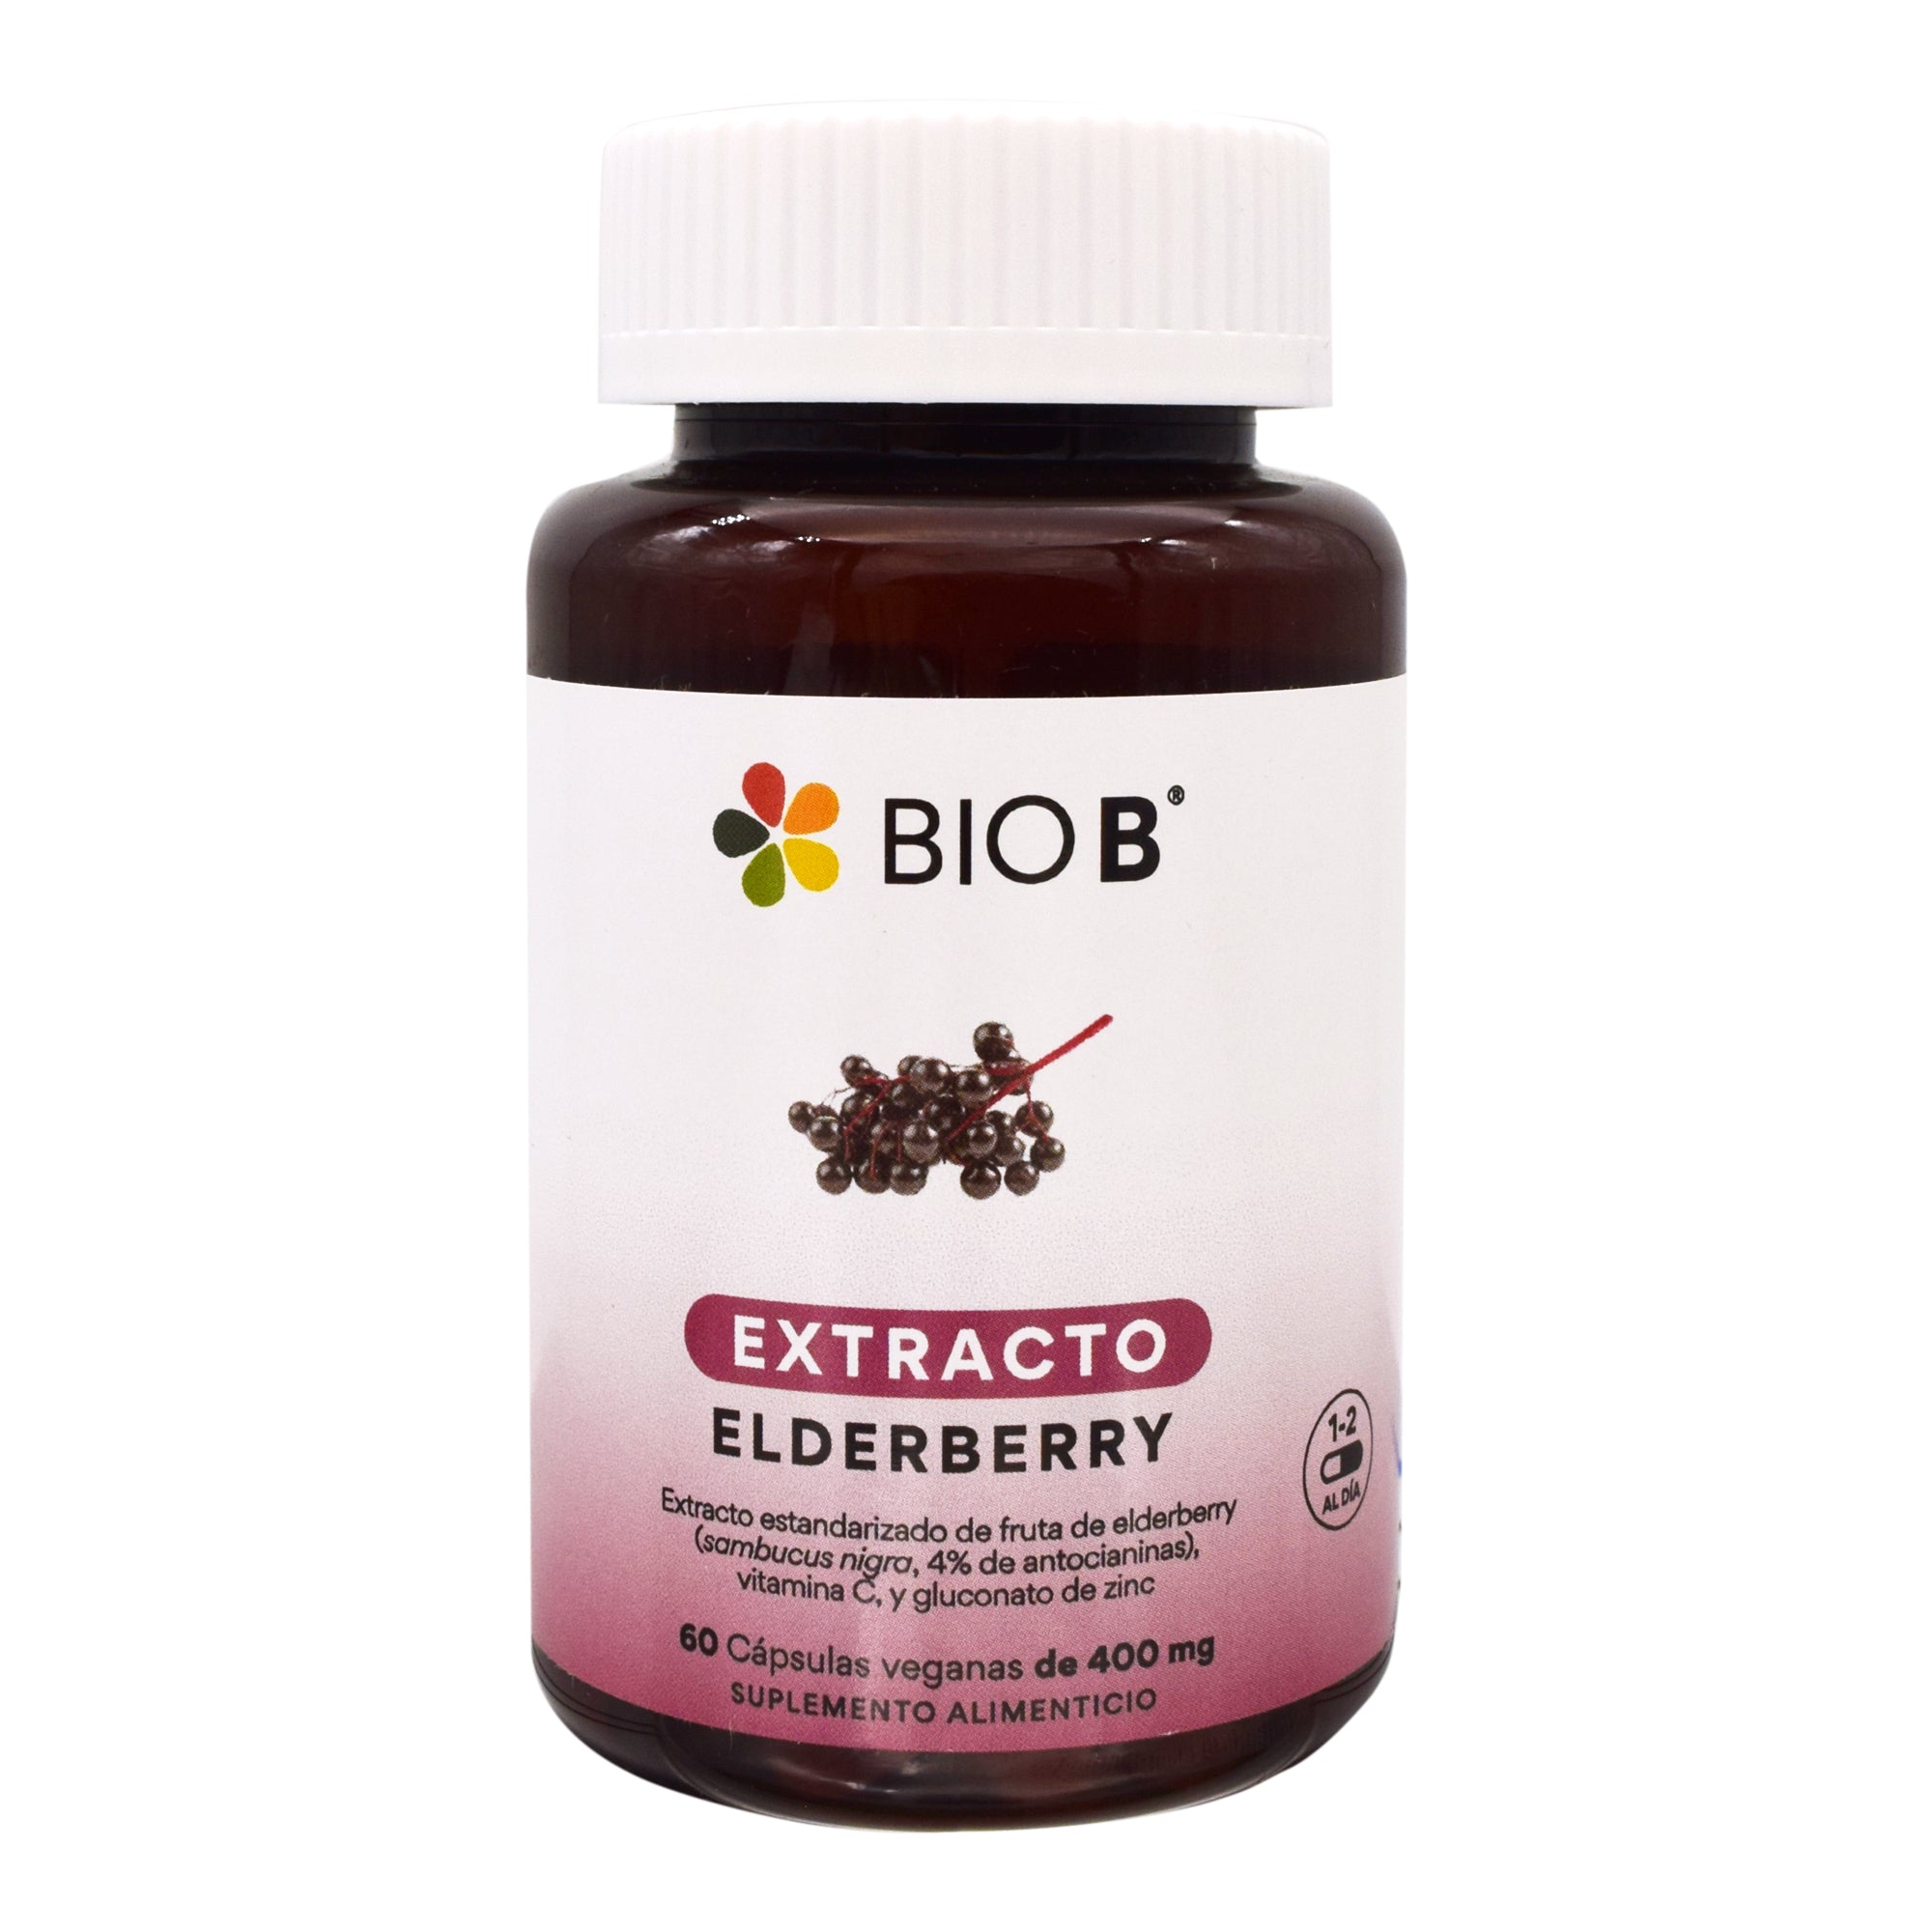 Extracto elderberry 60 cap